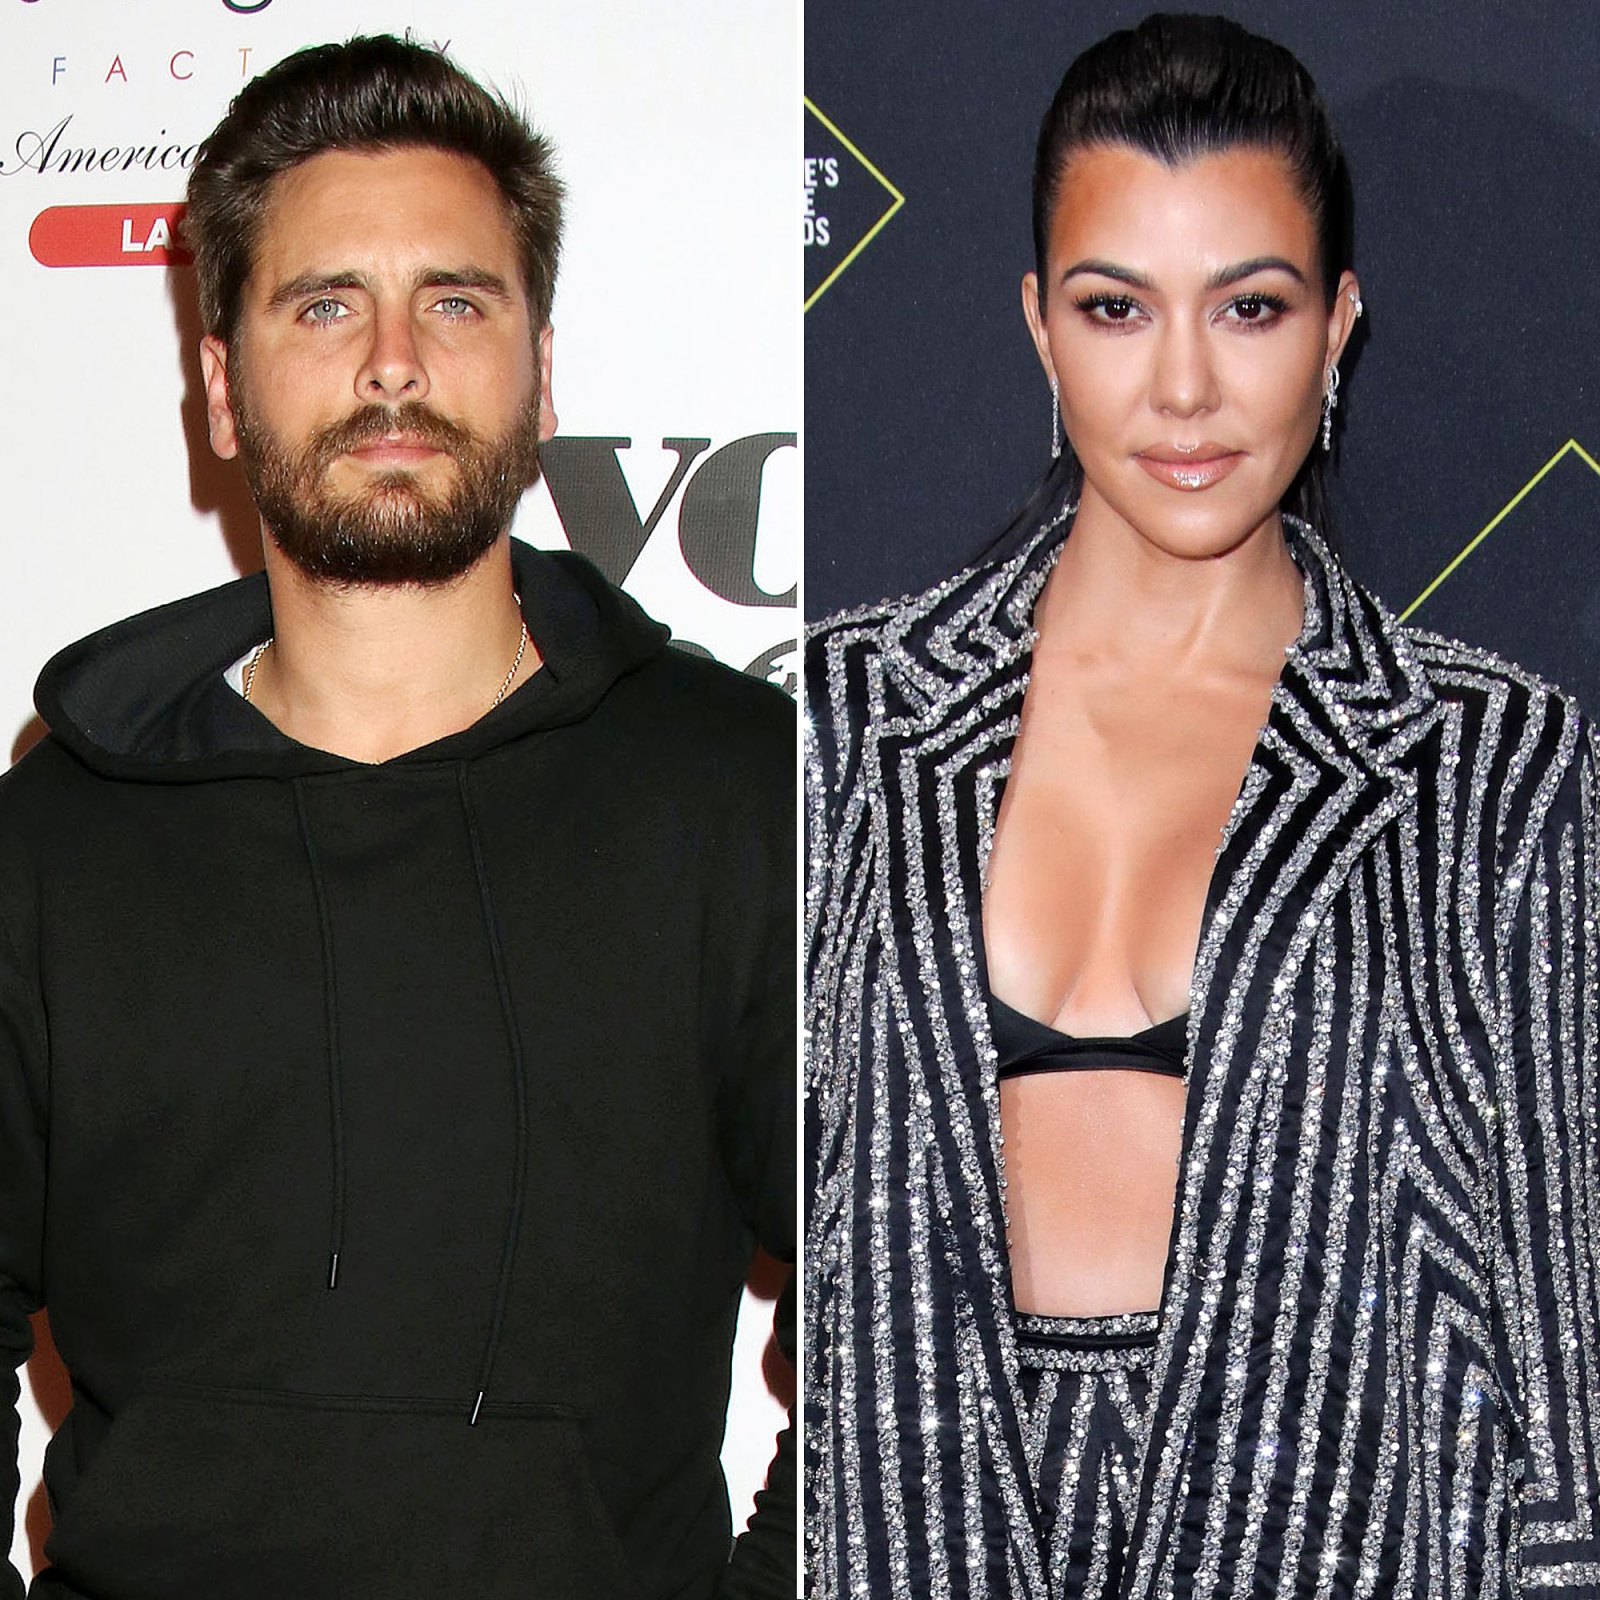 Kardashians Were Worried About Scott Disick Ahead of Travis Barker Proposal to Kourtney Kardashian